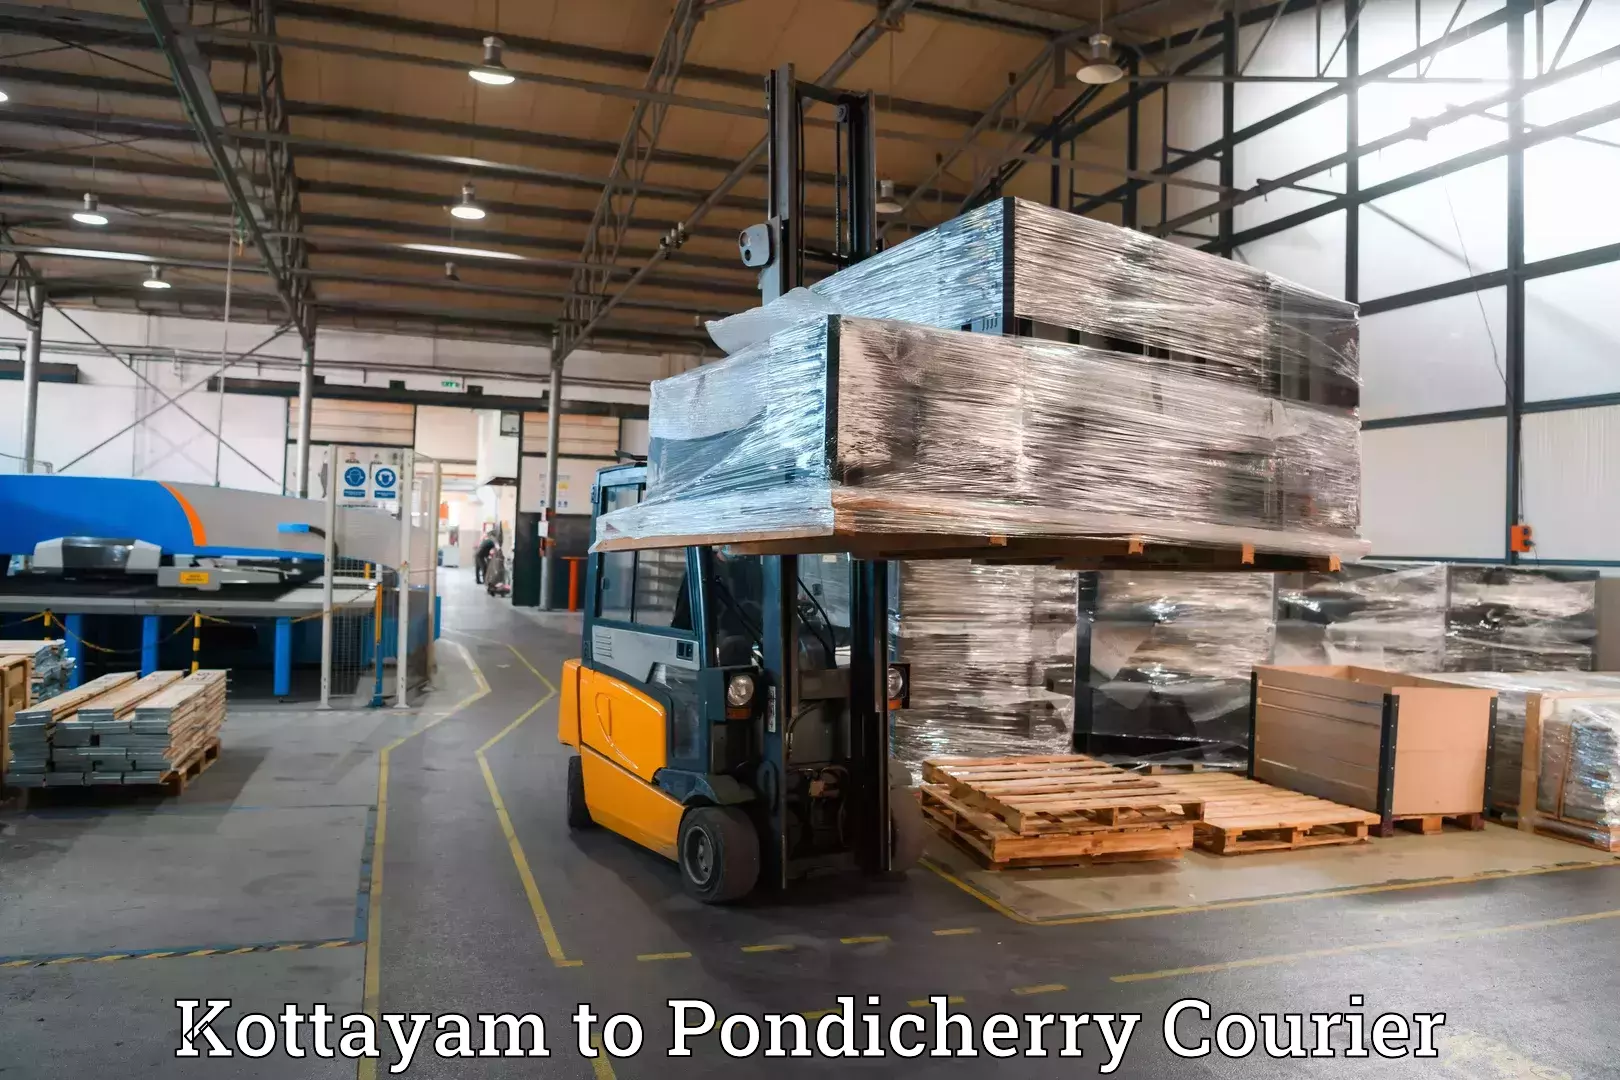 Luggage transport company Kottayam to Pondicherry